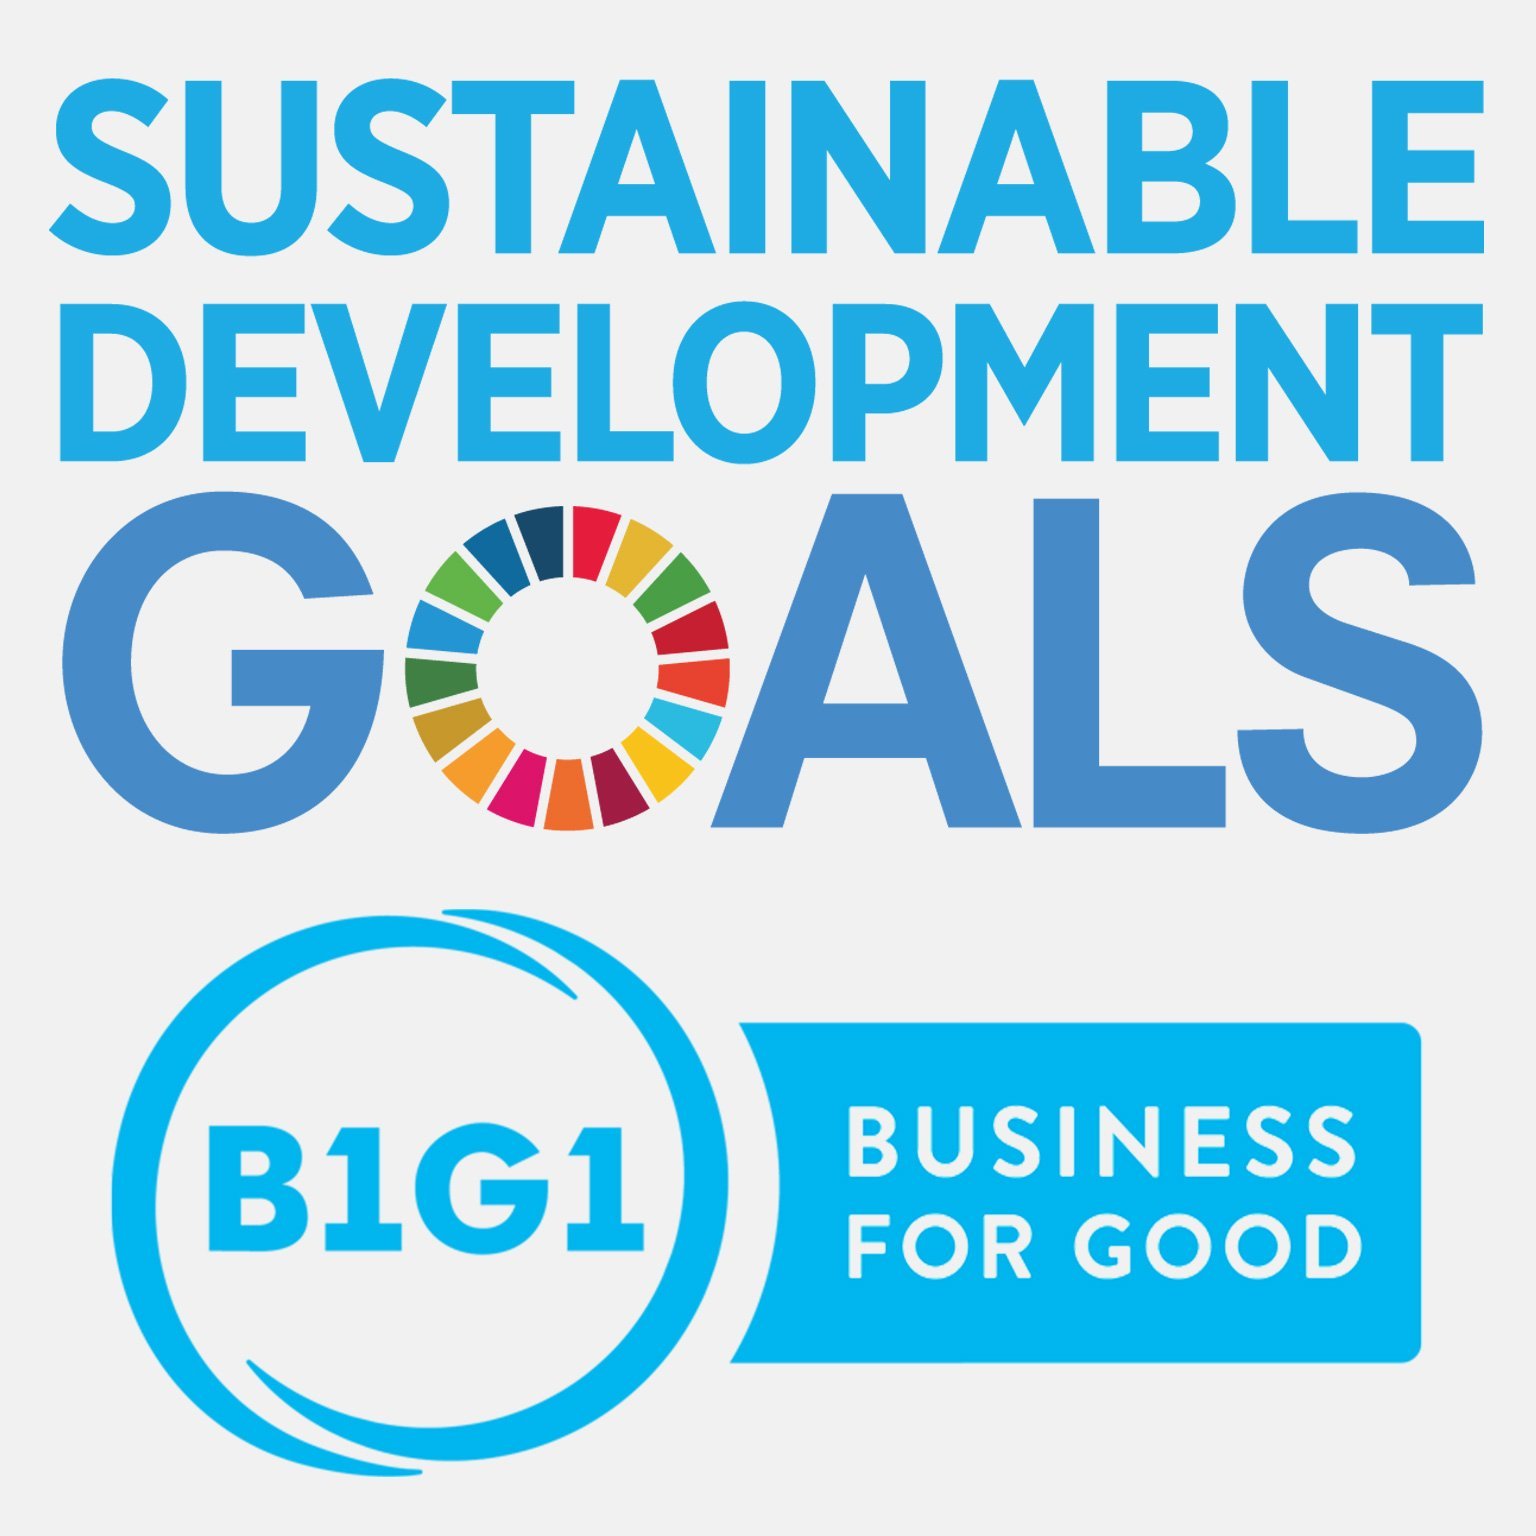 B1G1 SDG Sustainable